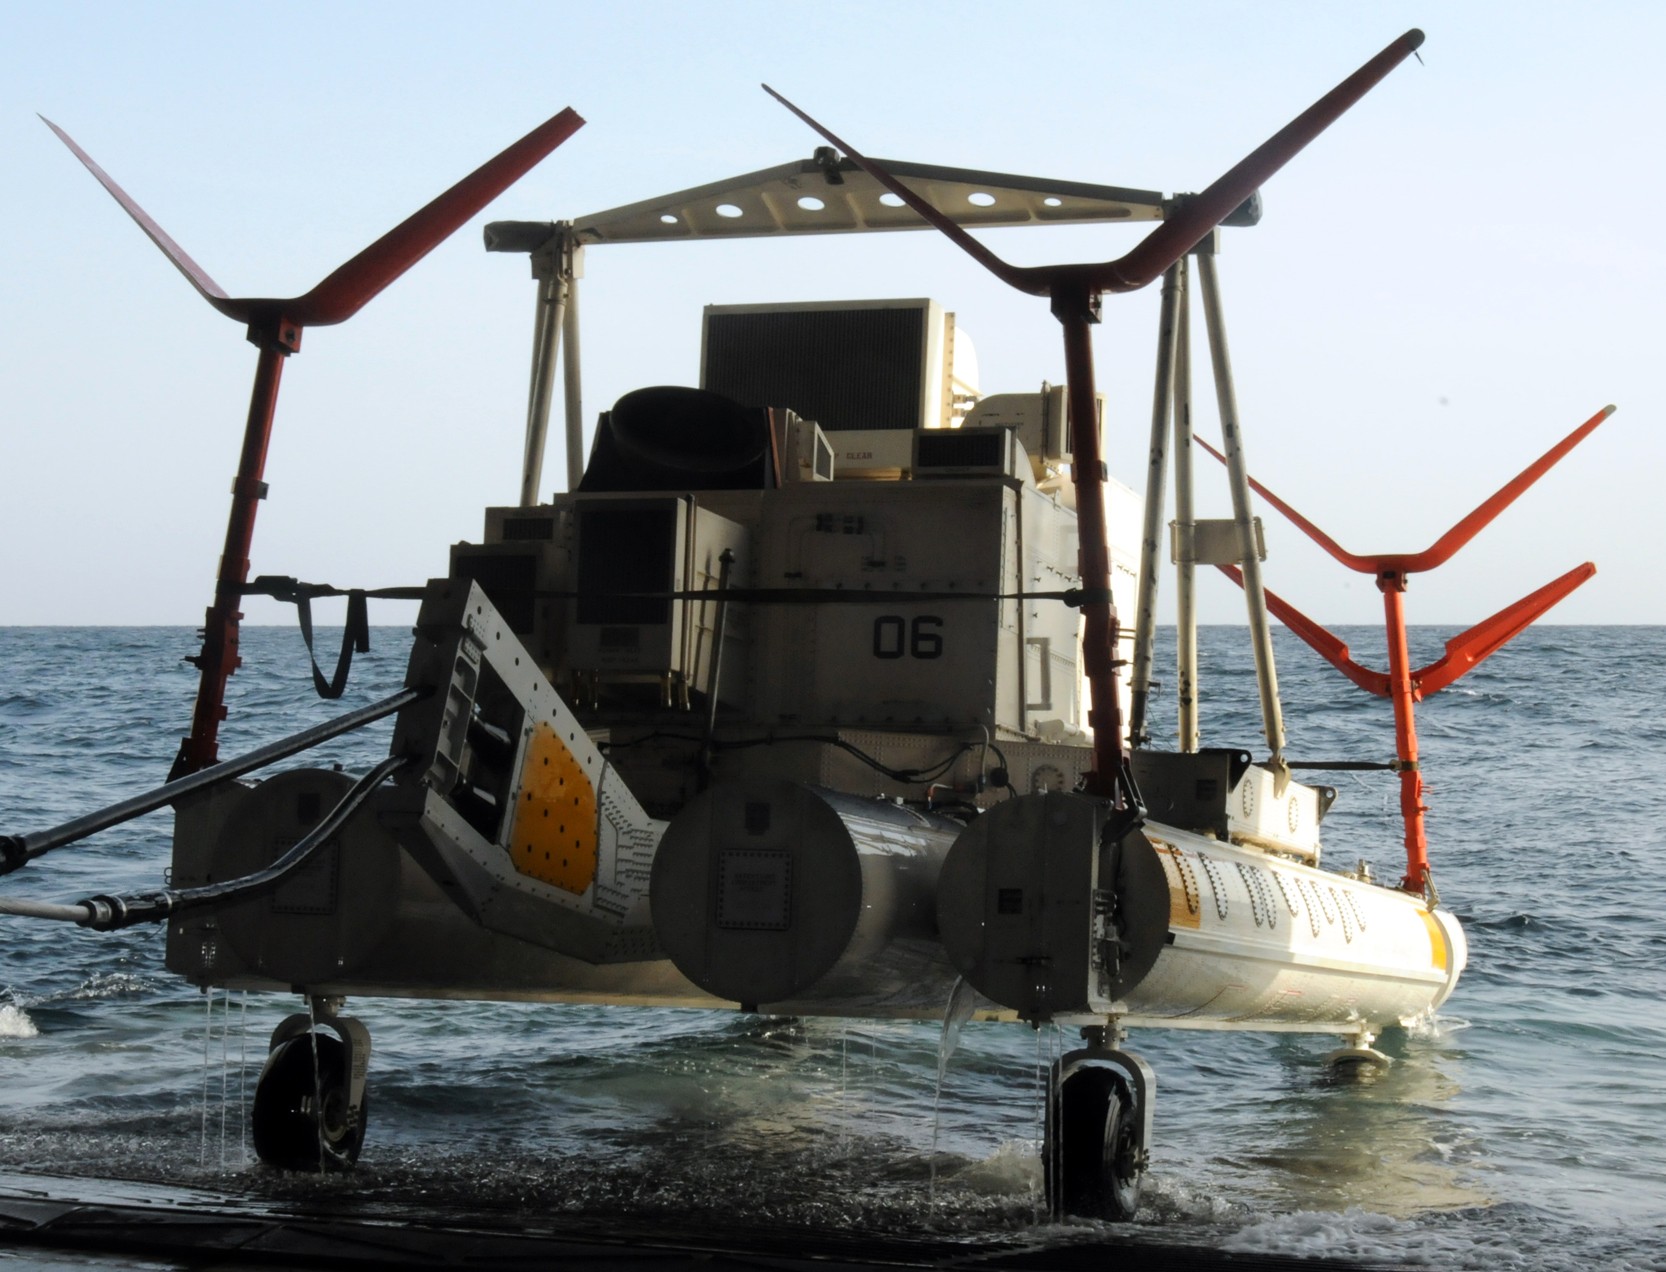 hm-15 blackhawks helicopter mine countermeasures squadron navy mh-53e sea dragon 63 mk-105 mod.4 mine countermeasures sled